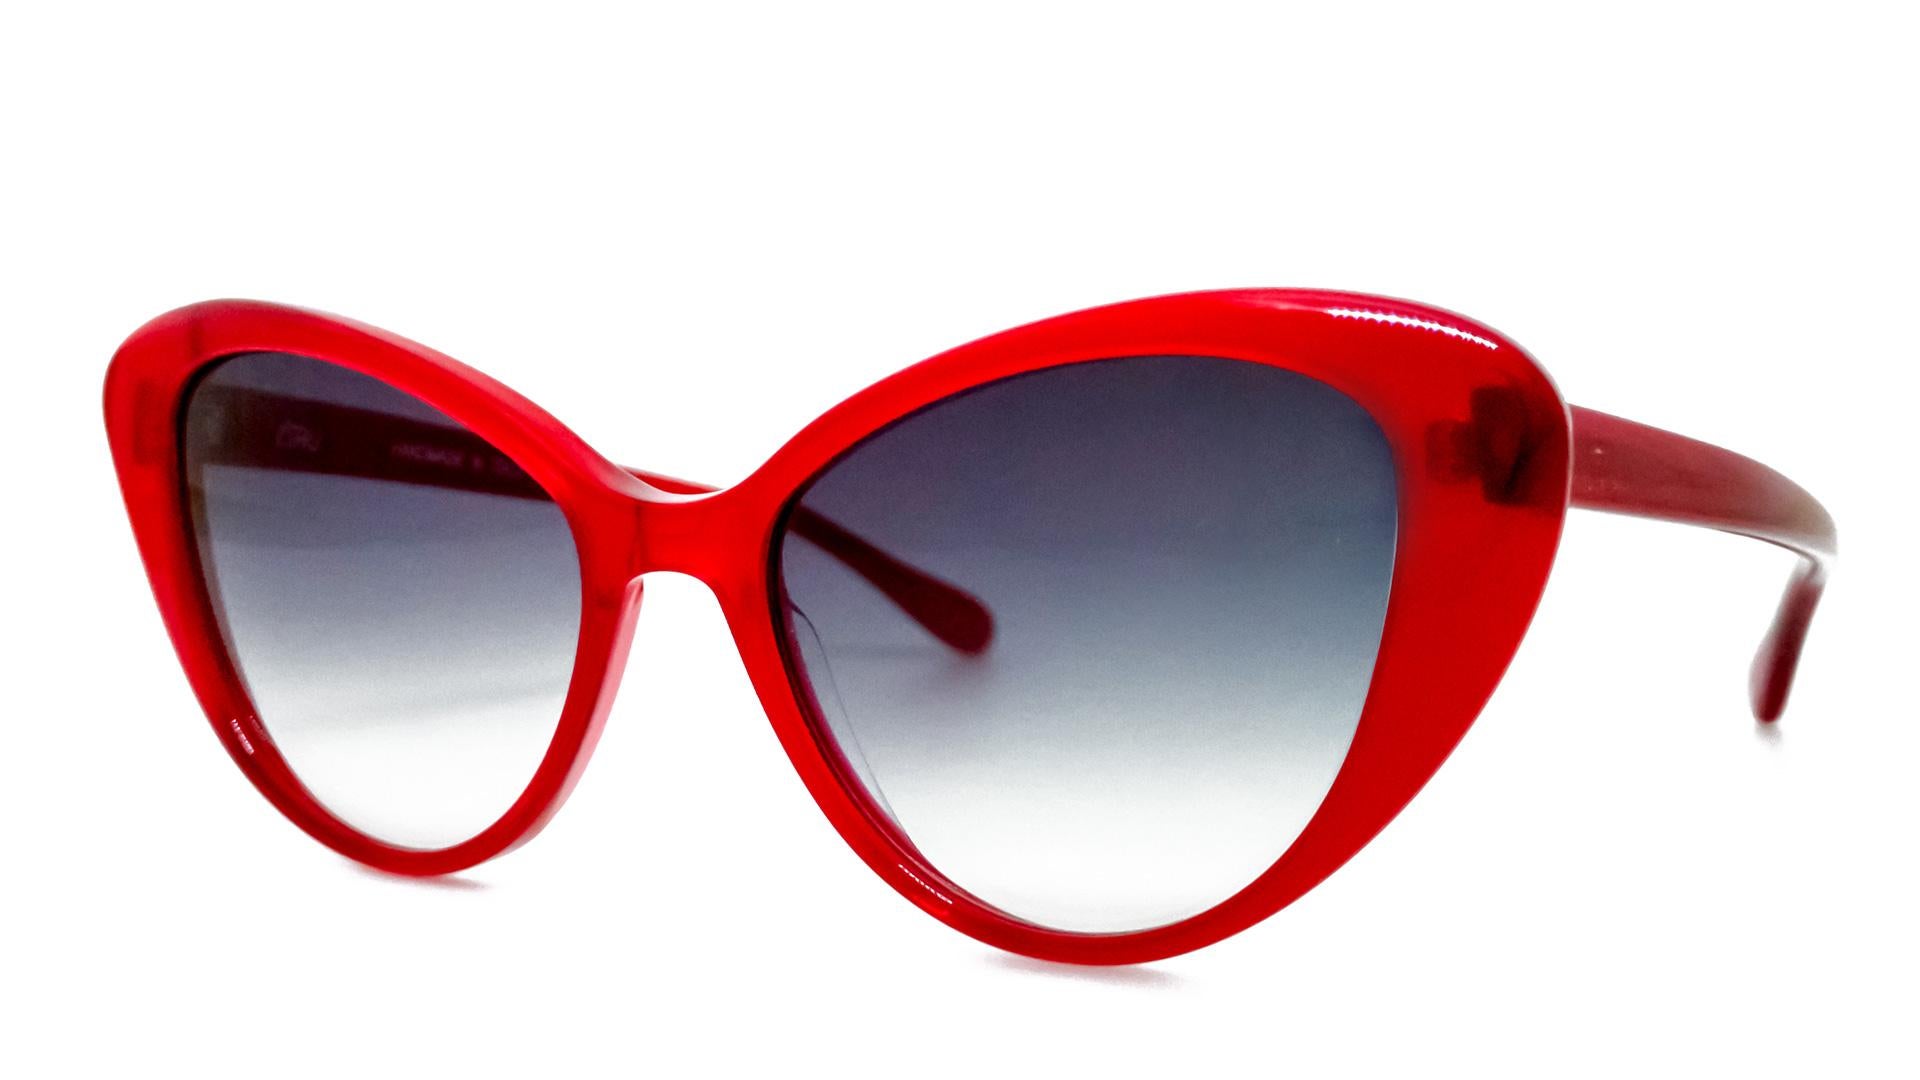 Aru Eyewear Red sunglasses 2